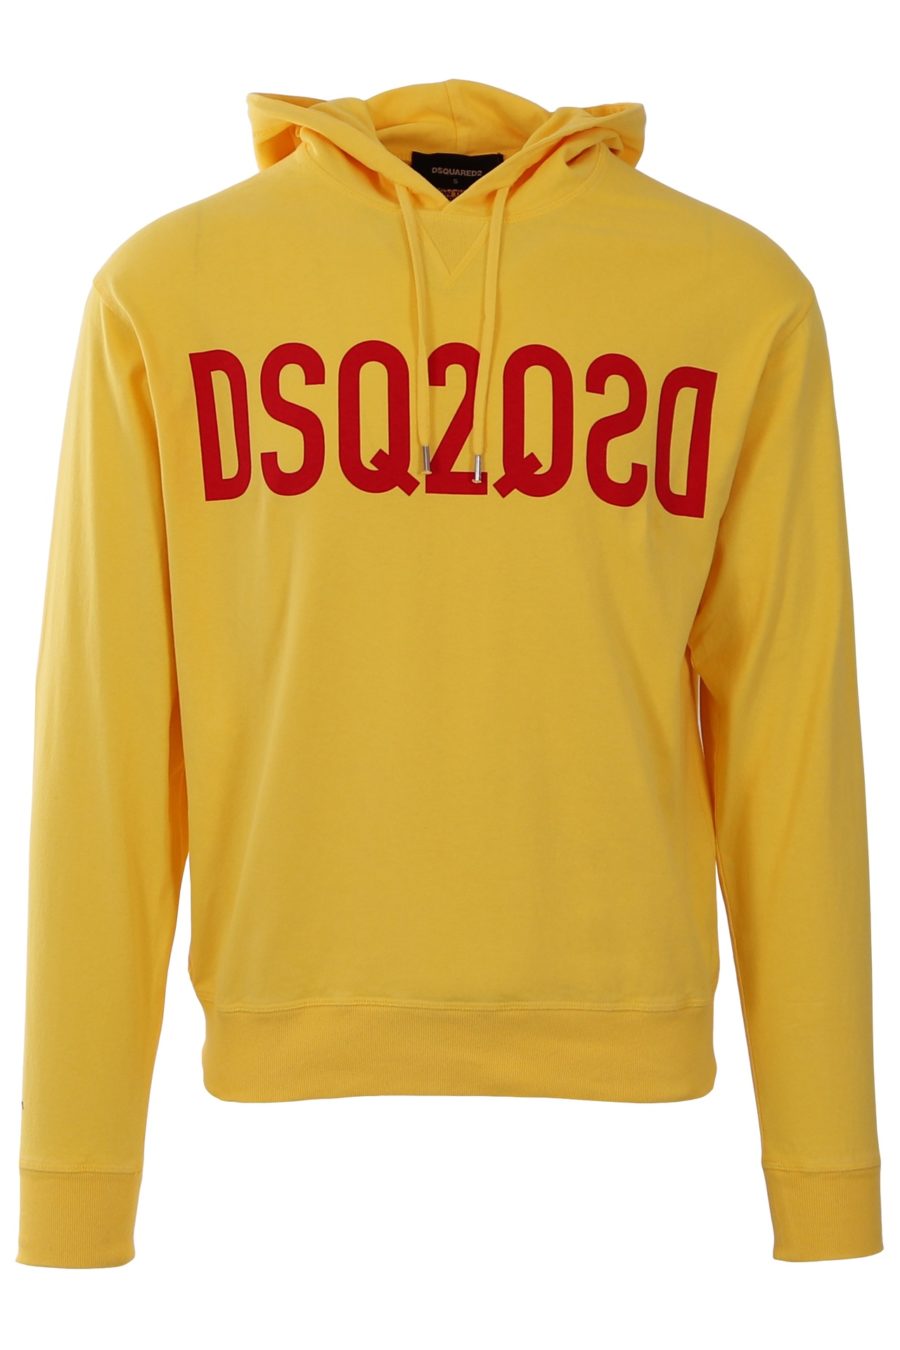 Sweatshirt Dsquared2 gelb mit rotem Logo - 87bd5cd5a295d252f6e13df8924255d23433991e